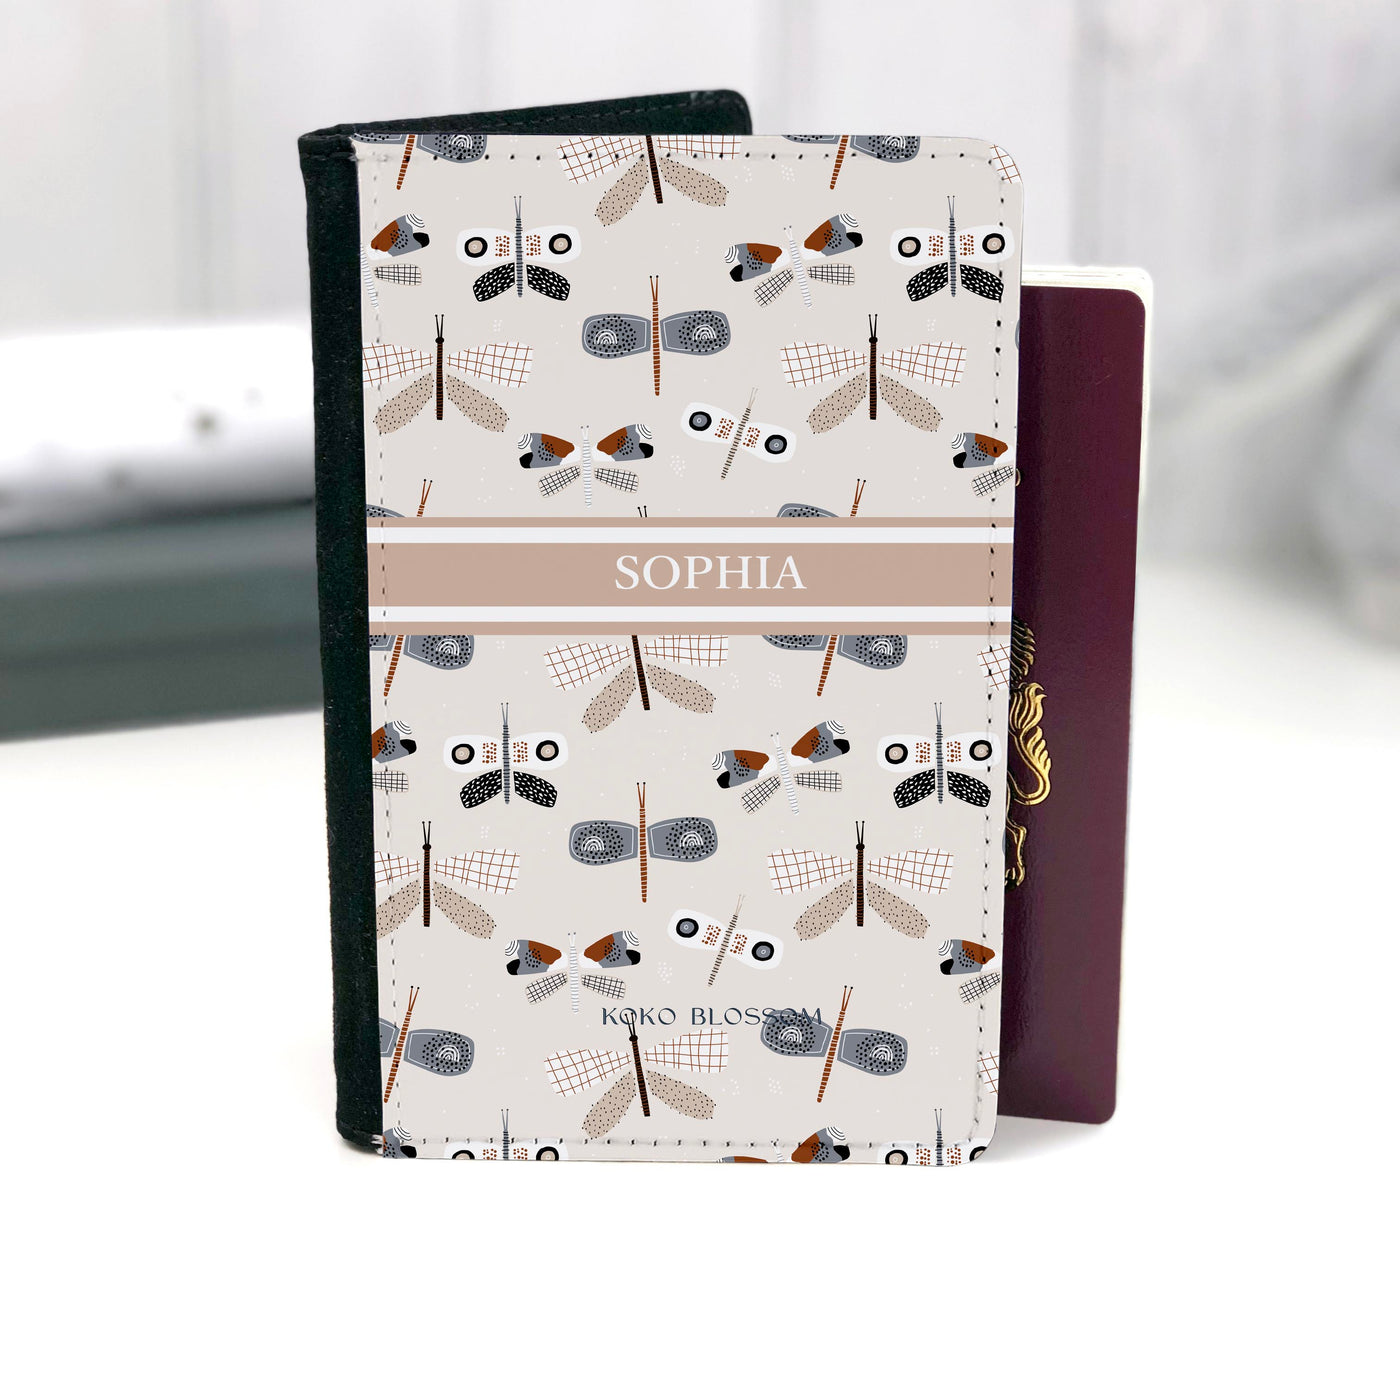 Kids Personalised Passport | Butterfly